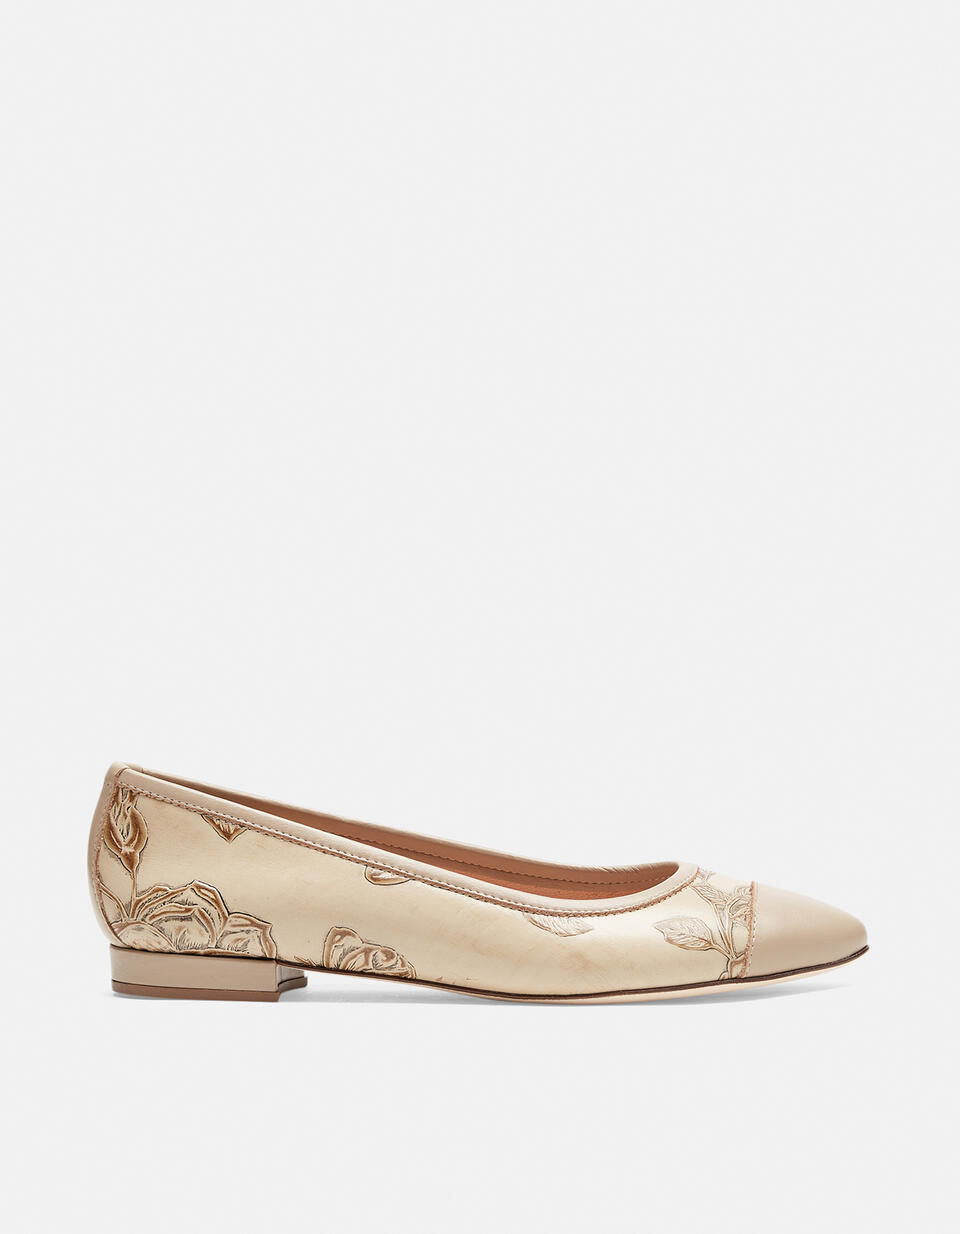 Ballet shoe Taupe  - Schuhe - Special Price - Cuoieria Fiorentina